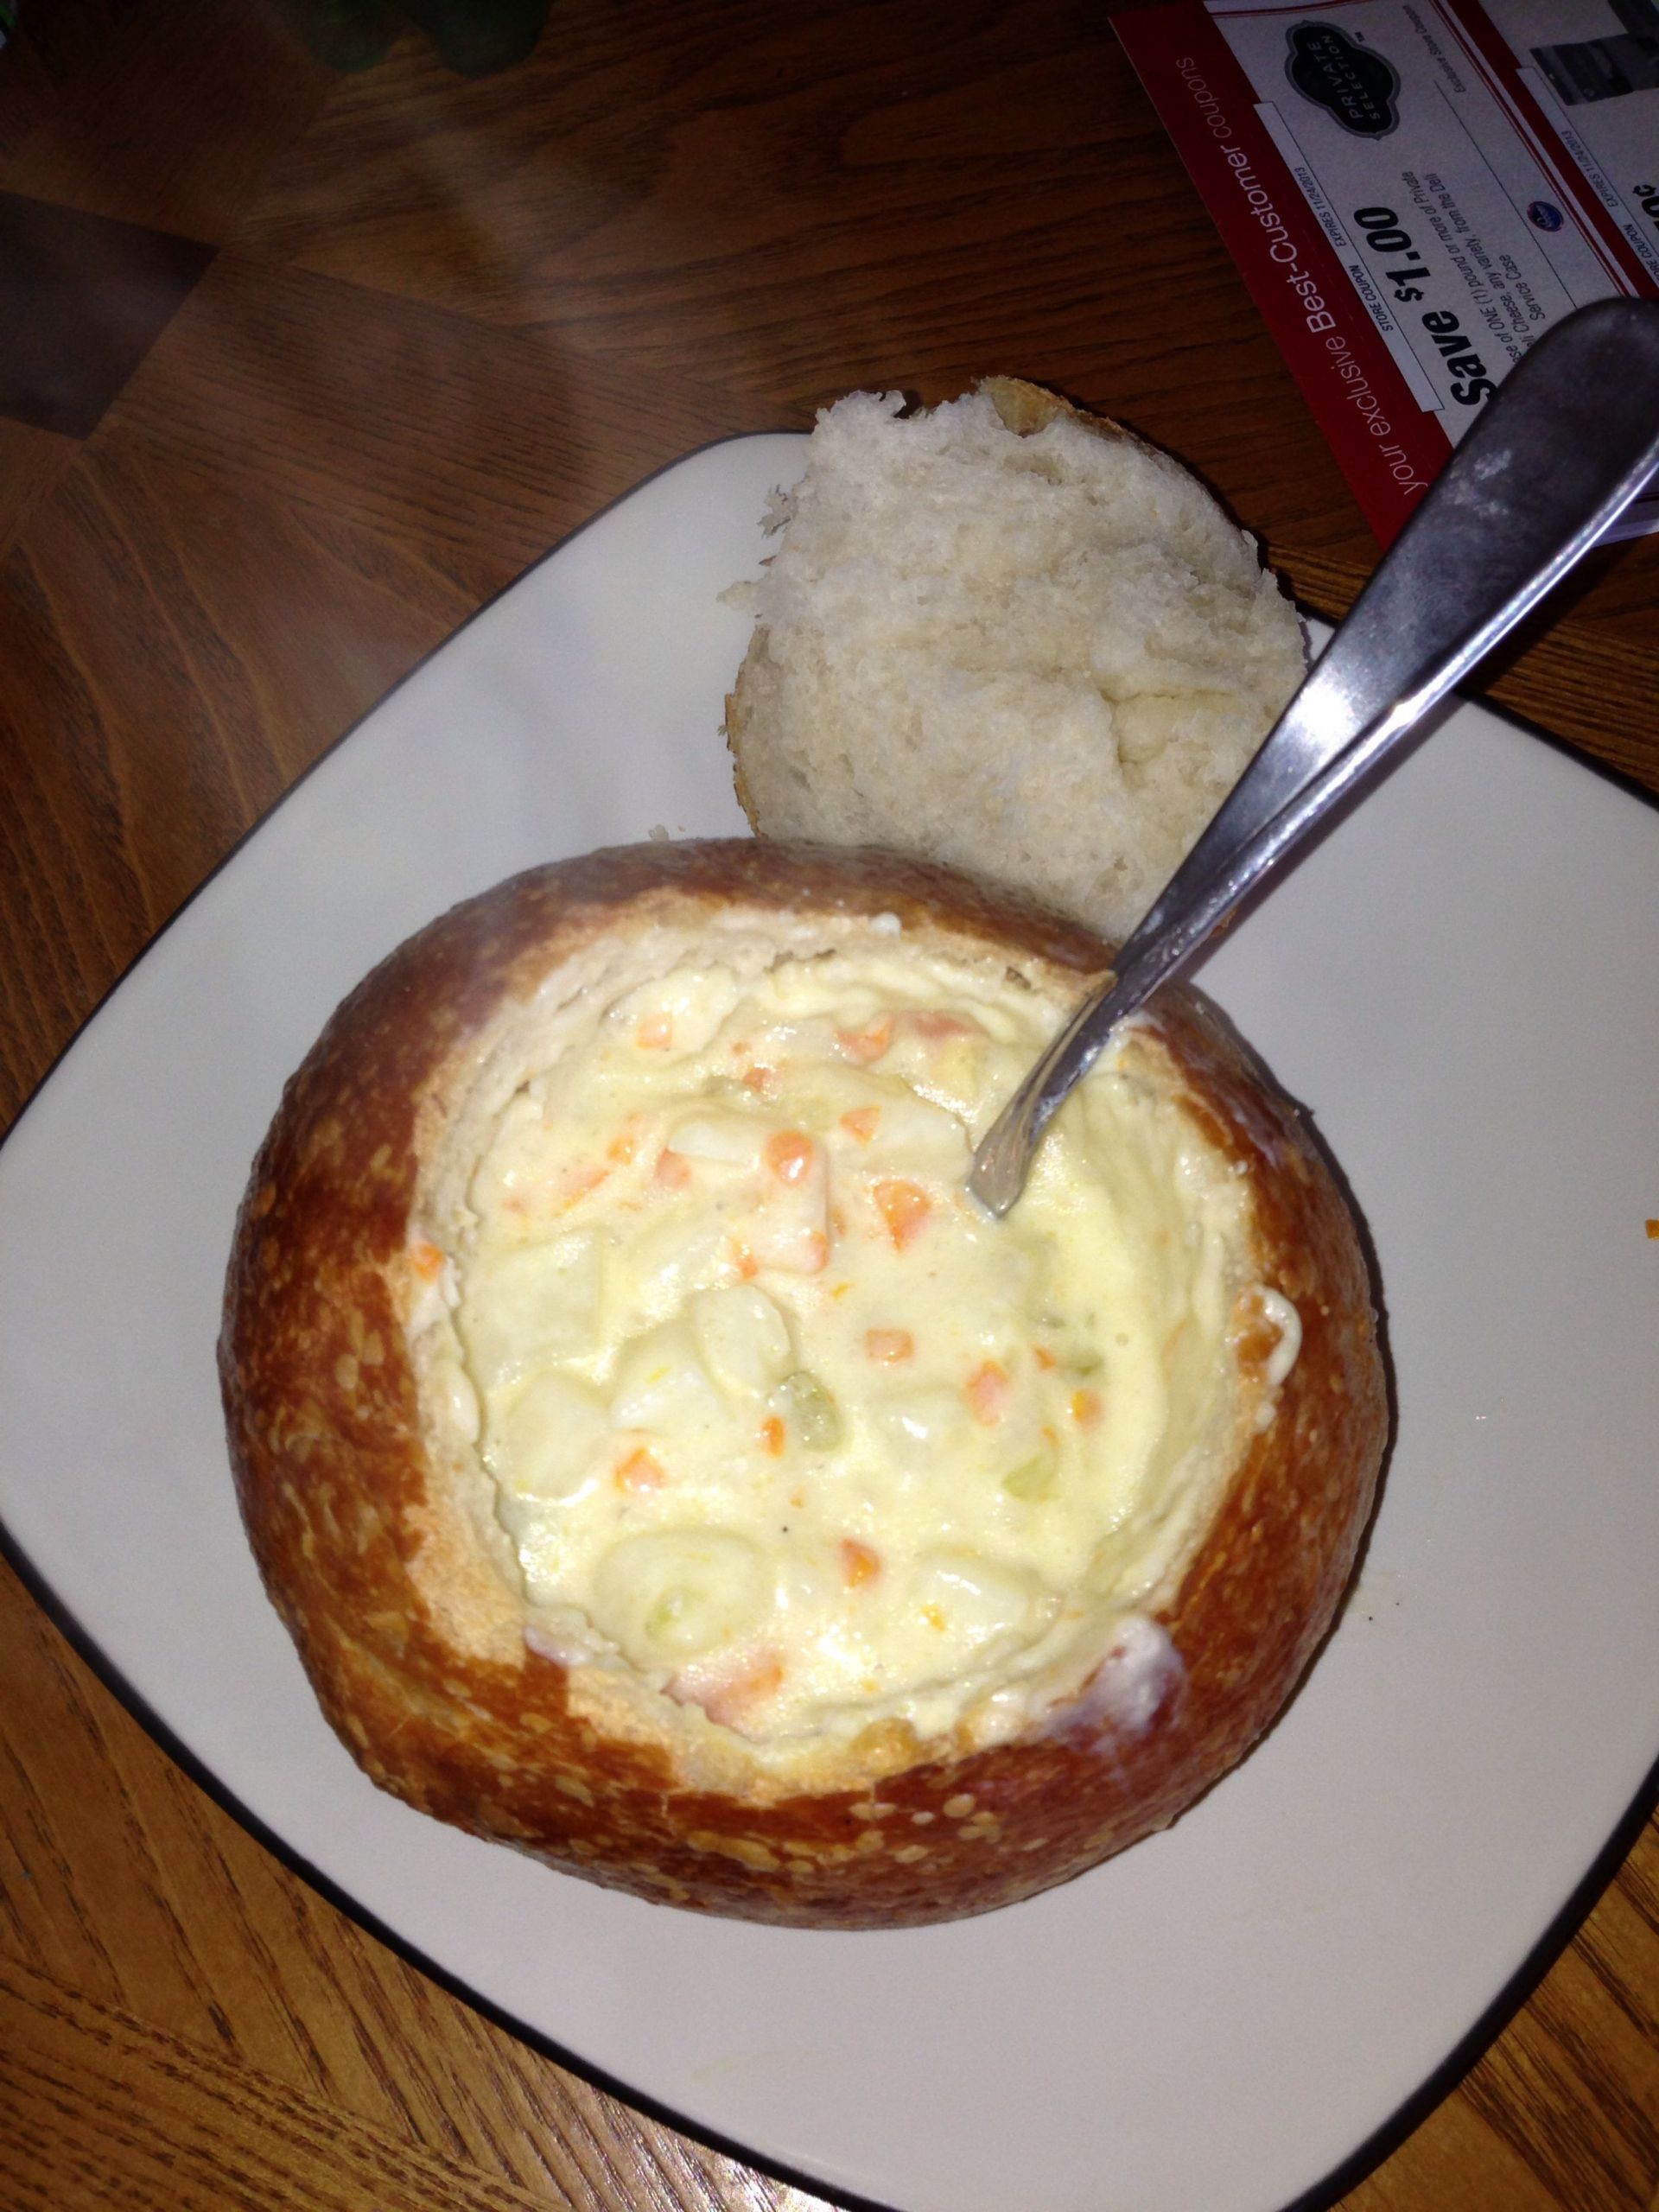 Panera Bread Baked Potato soup Bread Bowl Luxury My Very Own Homemade Creamy Potato soup too Delicious for